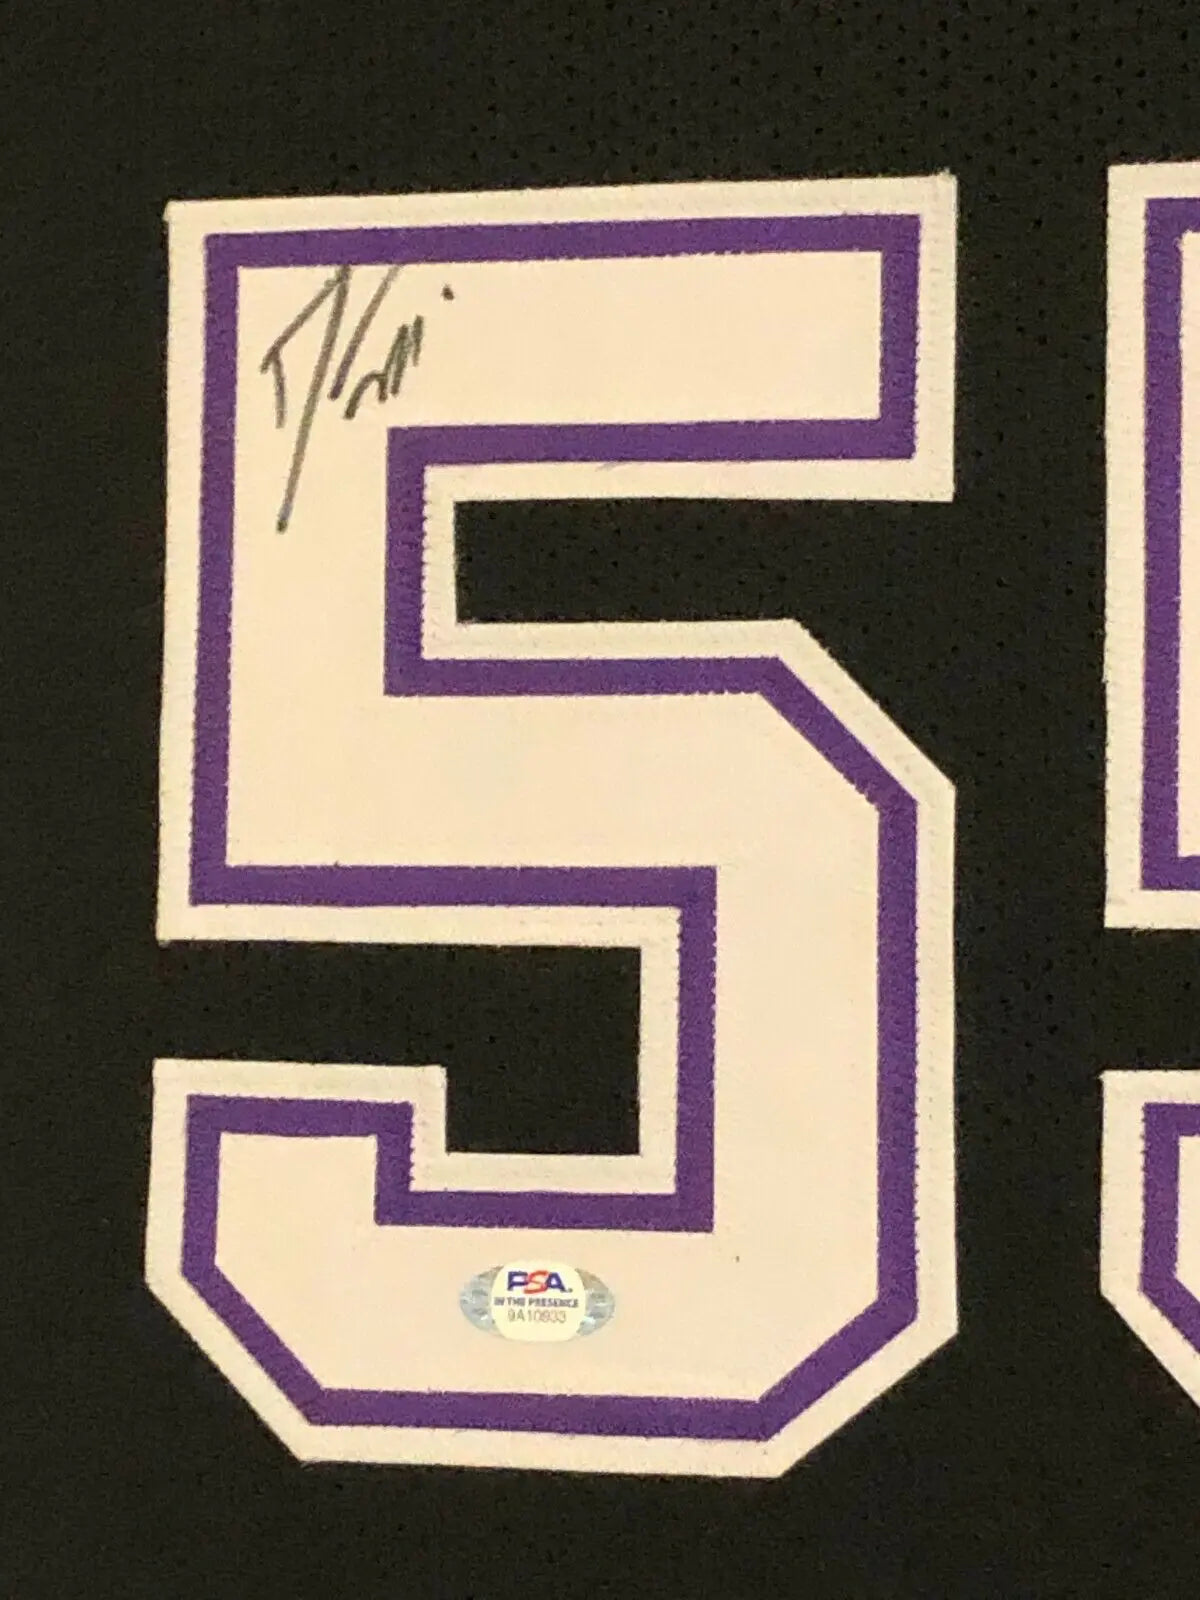 Jason Williams signed jersey PSA/DNA Sacramento Kings Autographed